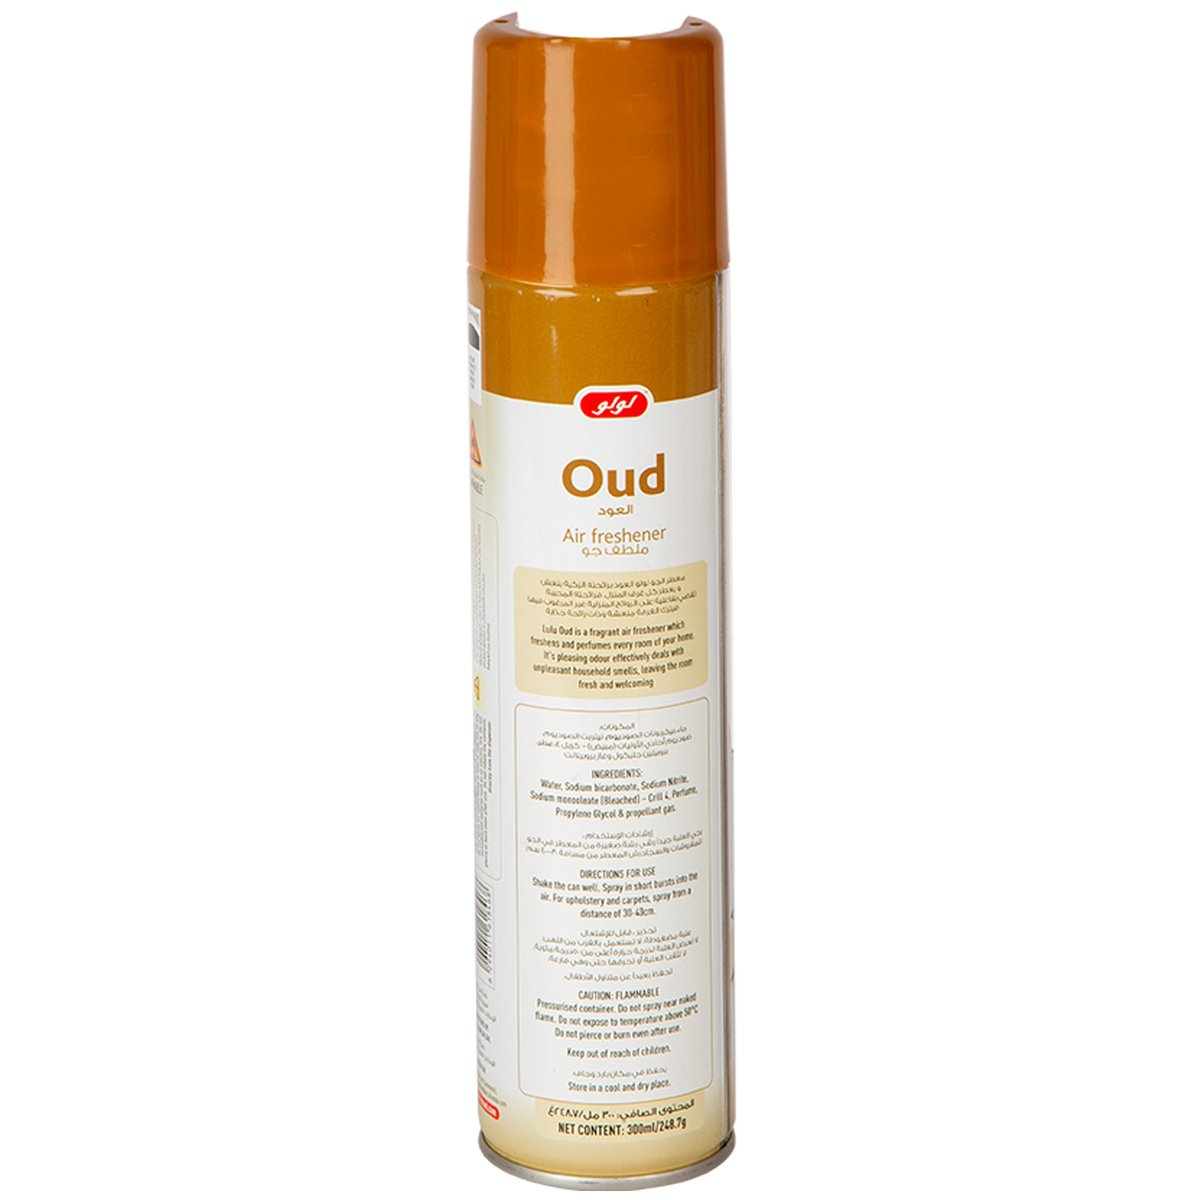 LuLu Air Freshener Oud 300ml